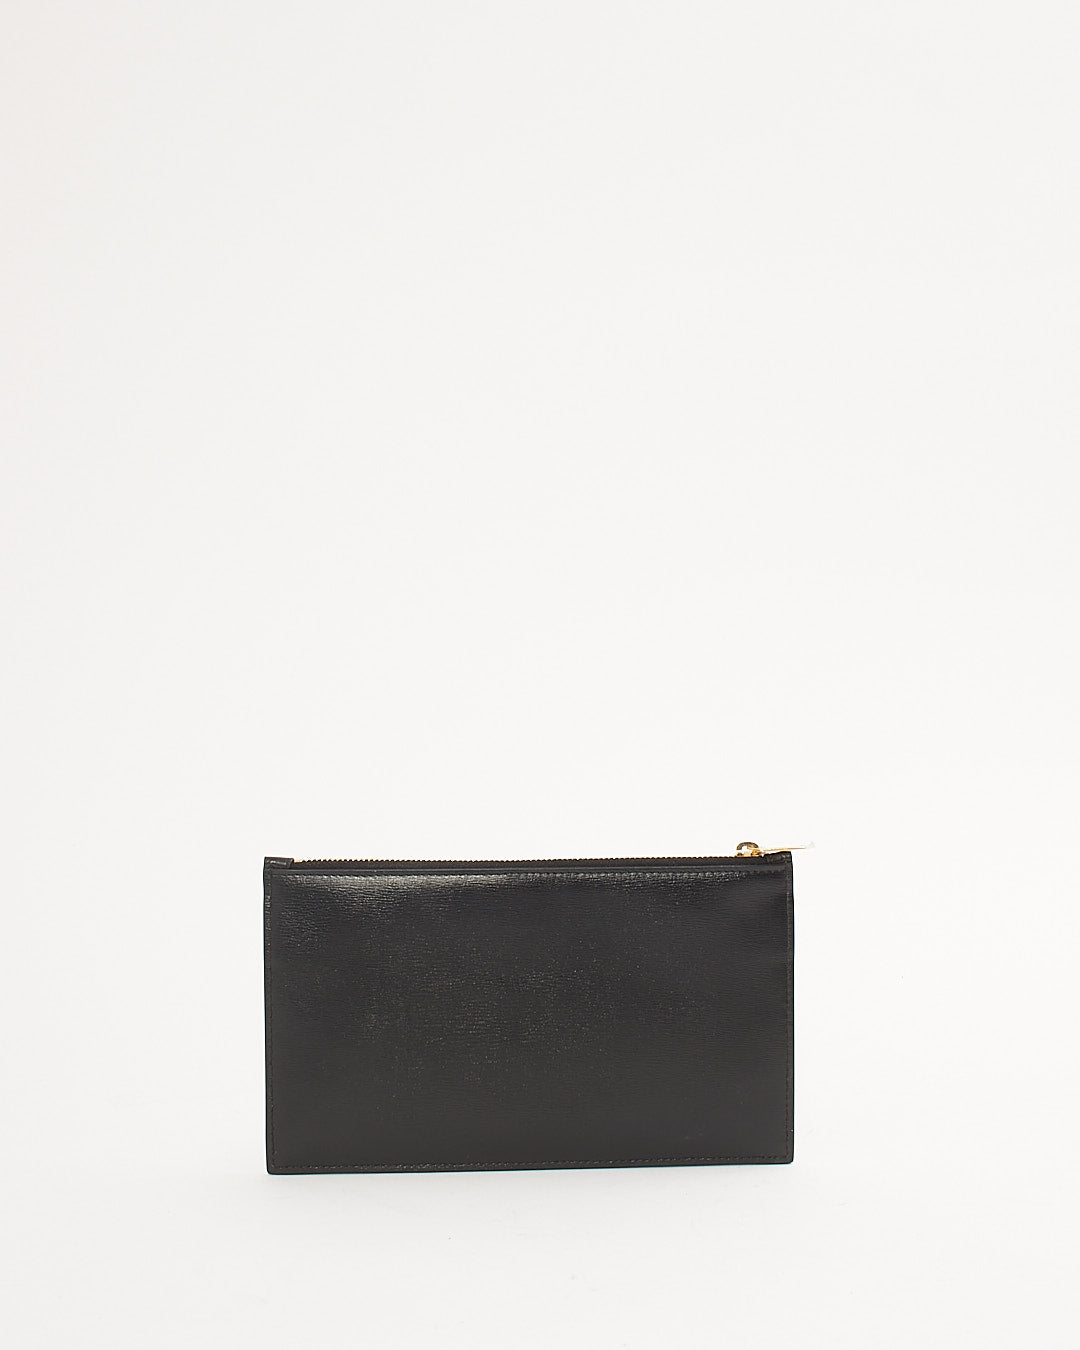 Saint Laurent Black Smooth Leather Envelope Pouch